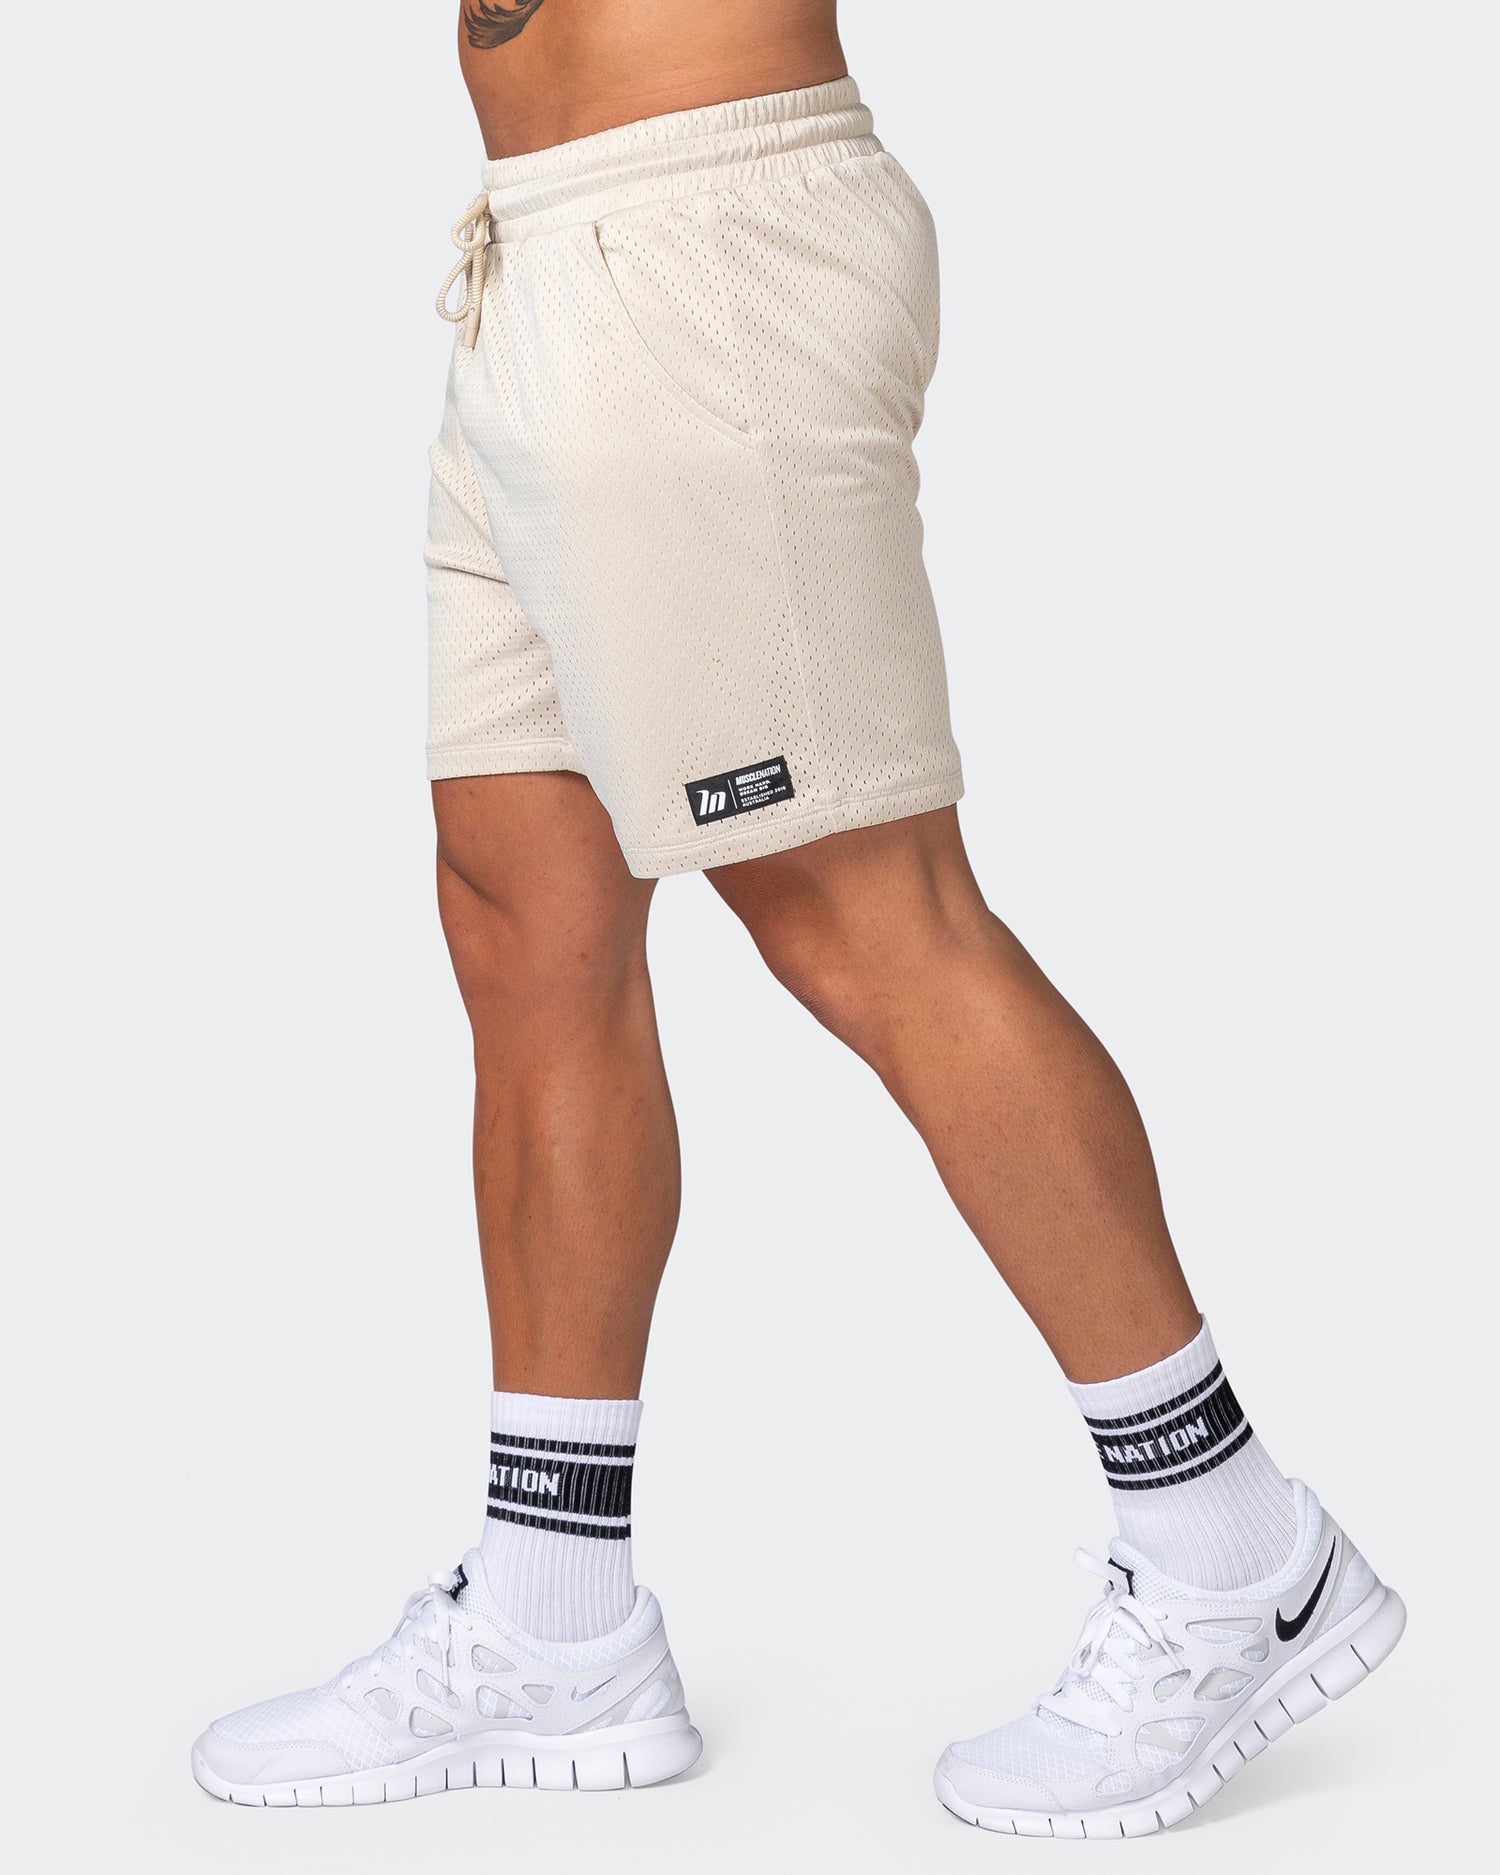 Lay Up 5" Shorts - Cream